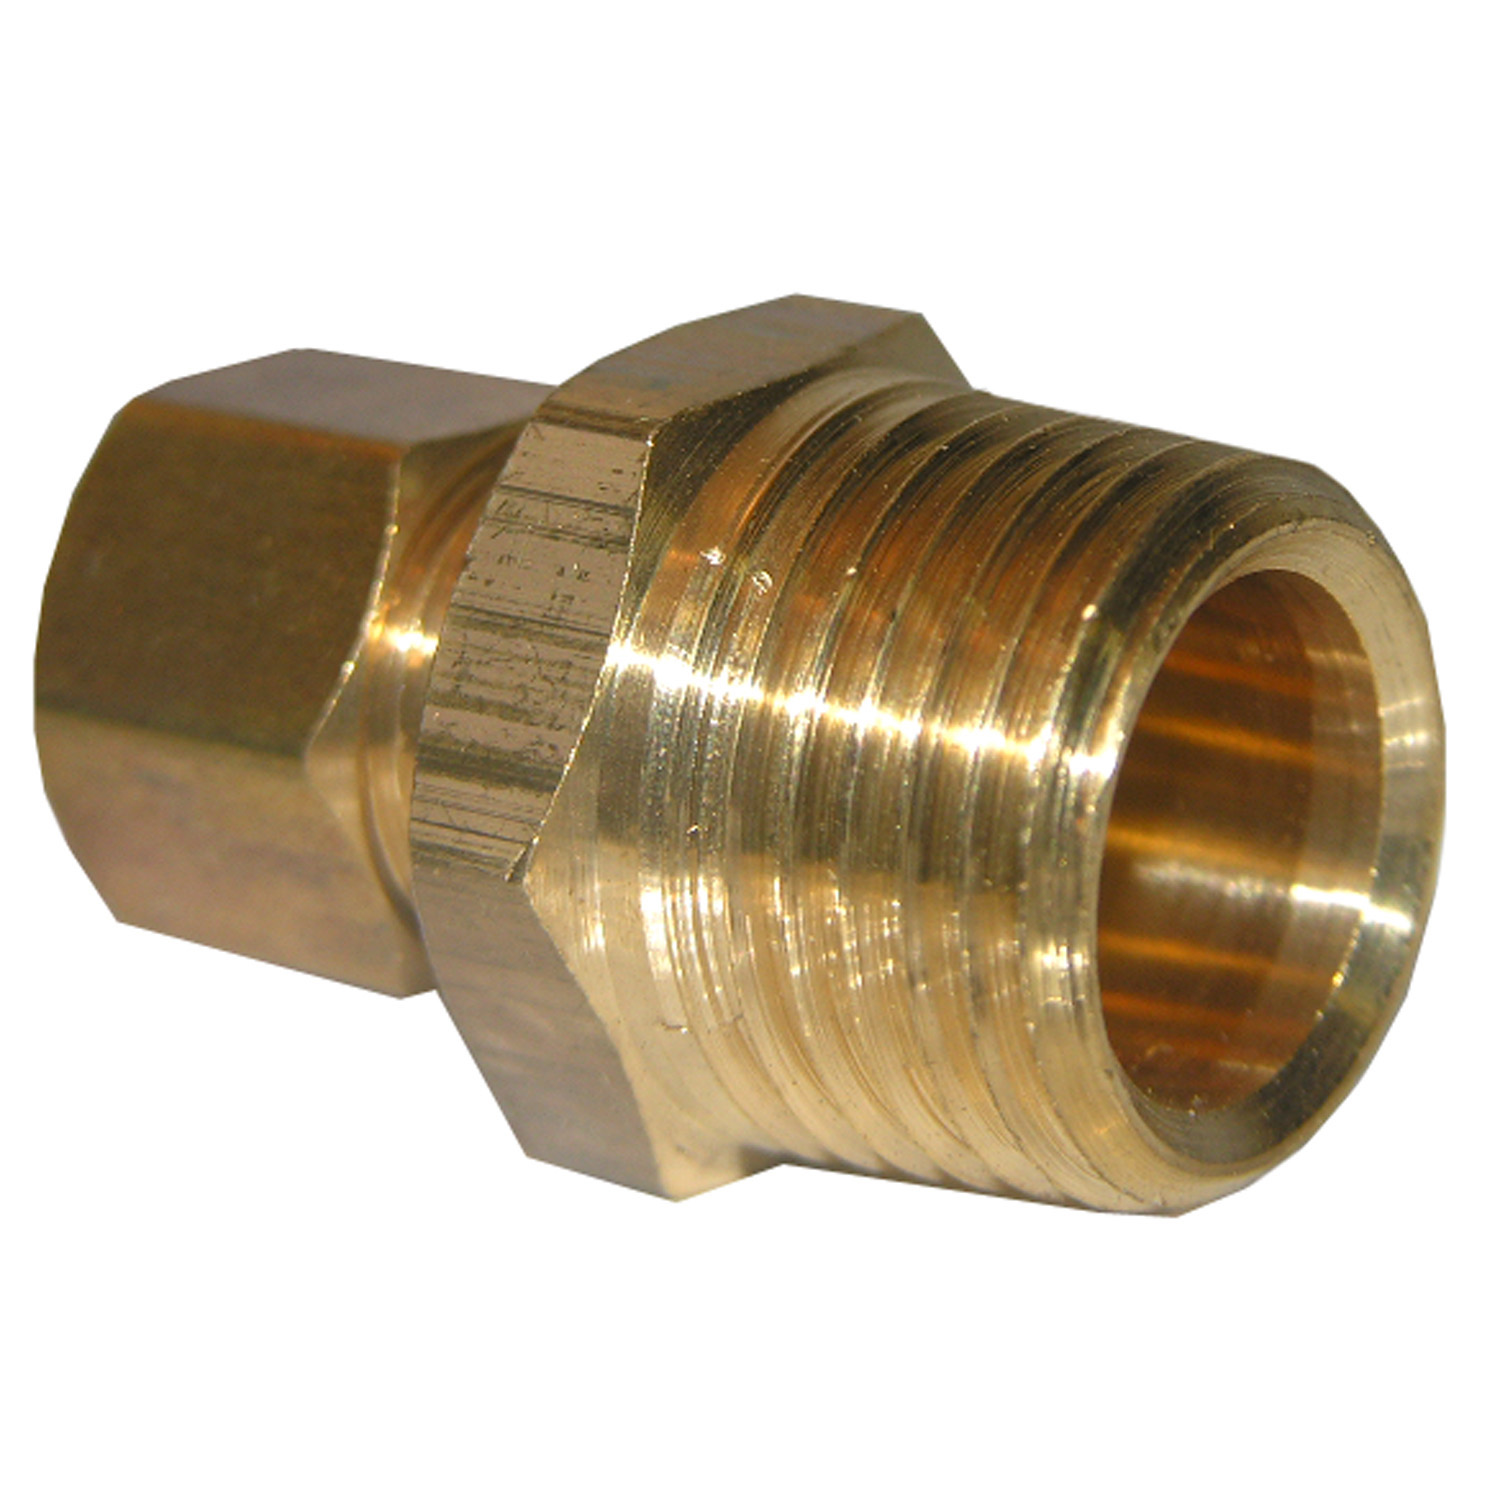 17-6857 Pipe Adapter, 5/8 x 3/8 in, Compression x MPT, Brass, 200 psi Pressure